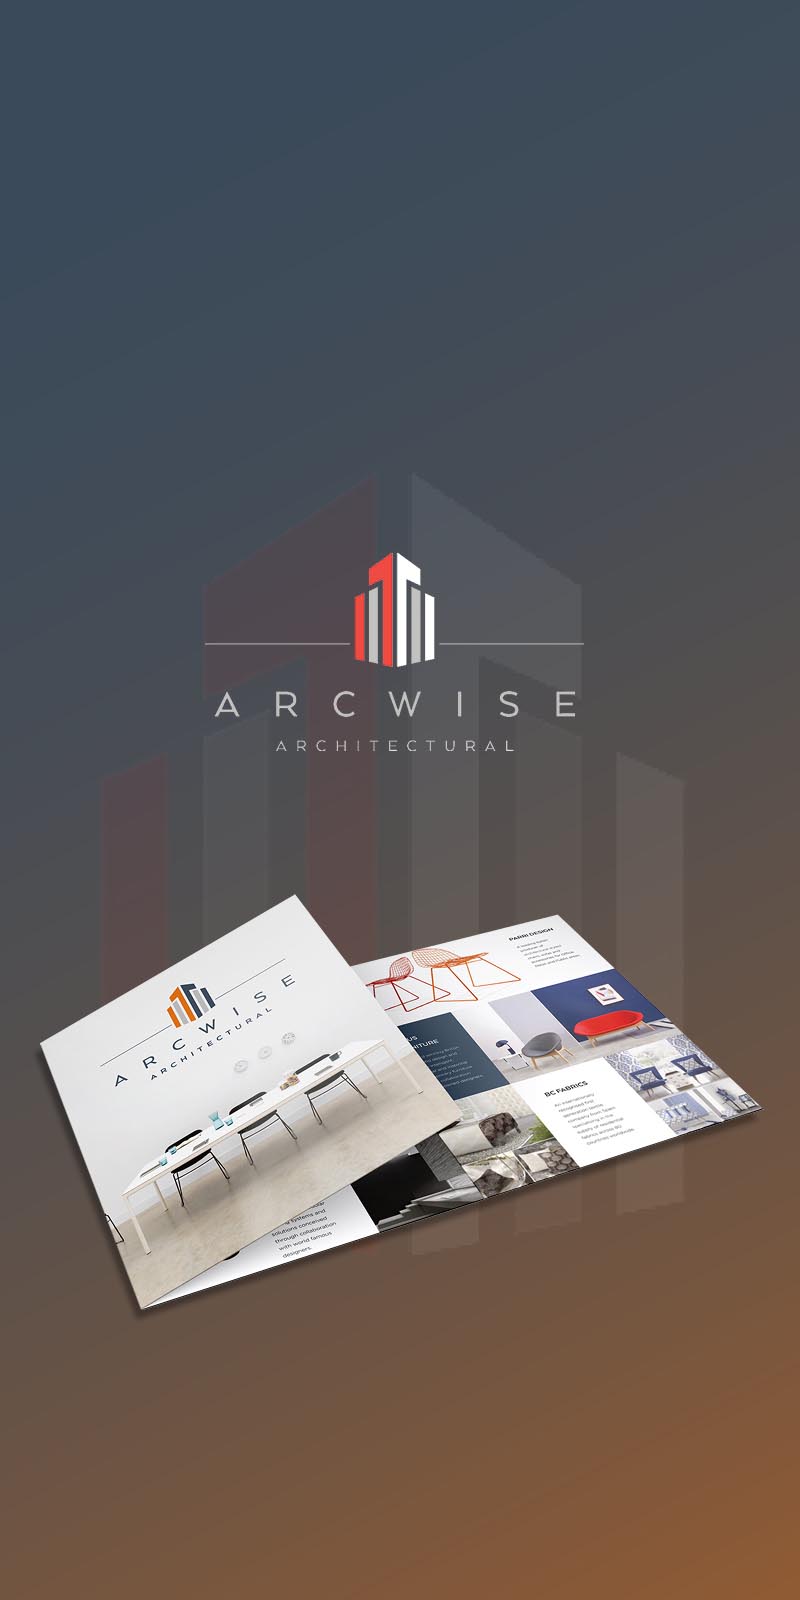 Arcwise design by Think Creative Agency